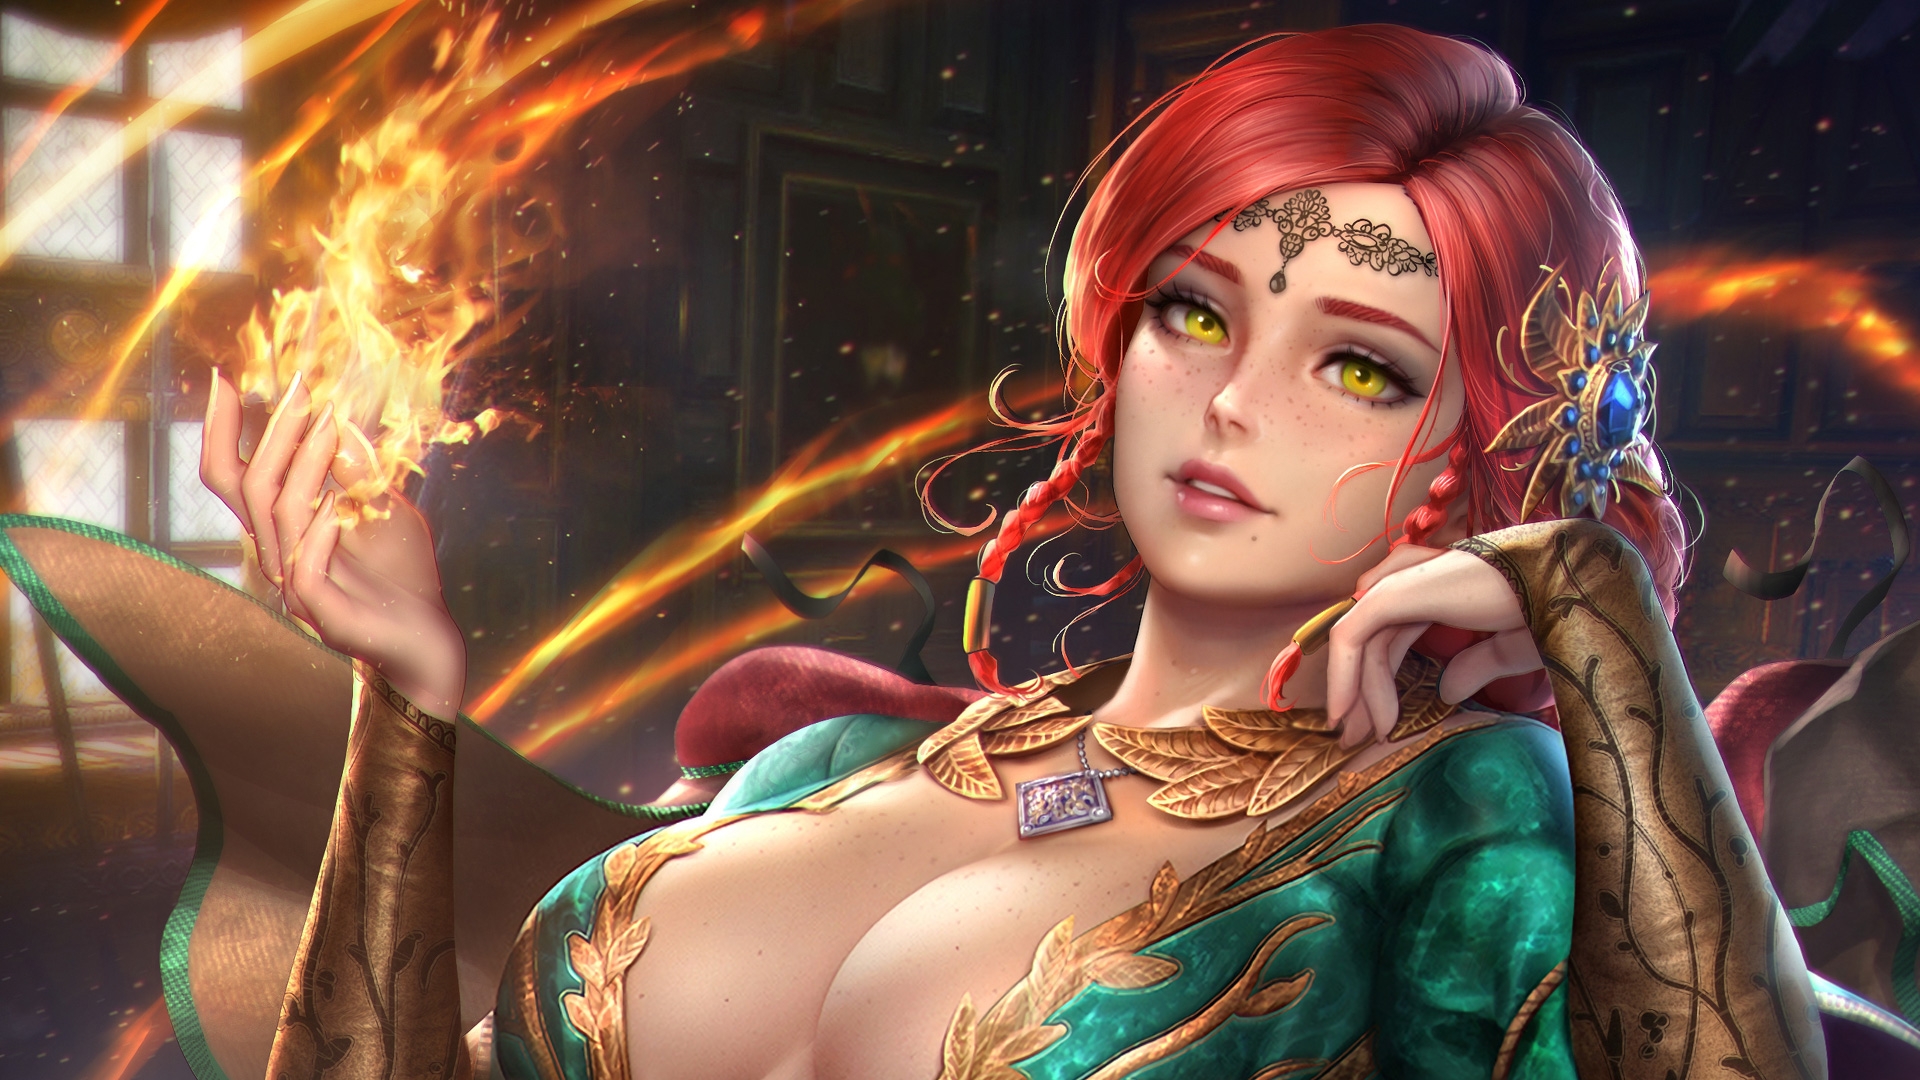 General 1920x1080 Espada fire boobs The Witcher 3: Wild Hunt Triss Merigold NeoArtCorE (artist) fantasy girl digital art